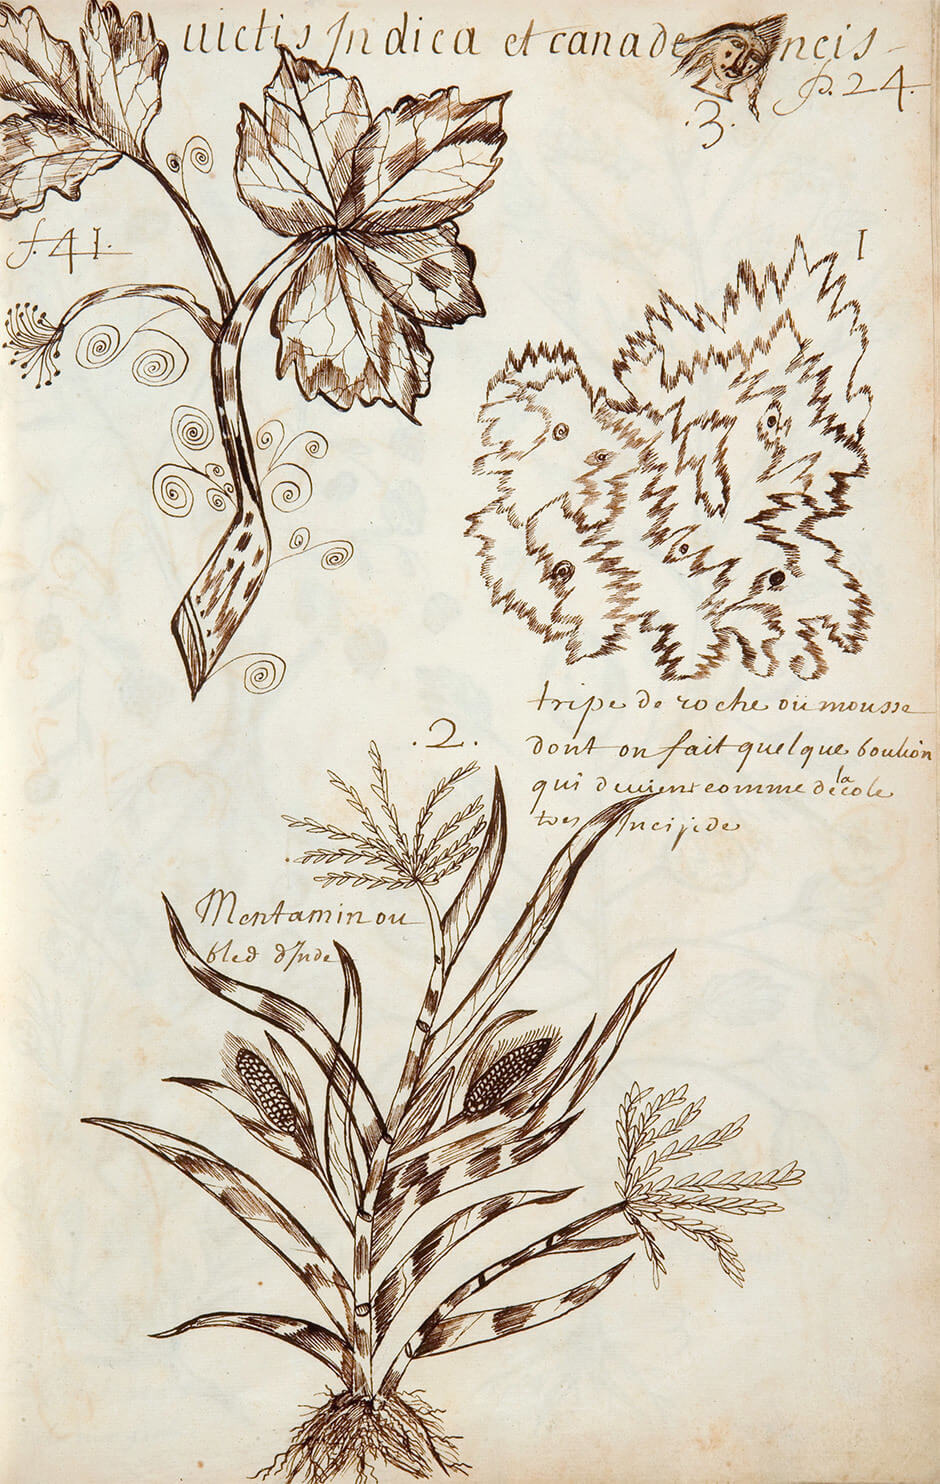 Art Canada Institute, Louis Nicolas, Tripe de Roche, or Moss (Tripe de roche ou mousse), Codex Canadensis